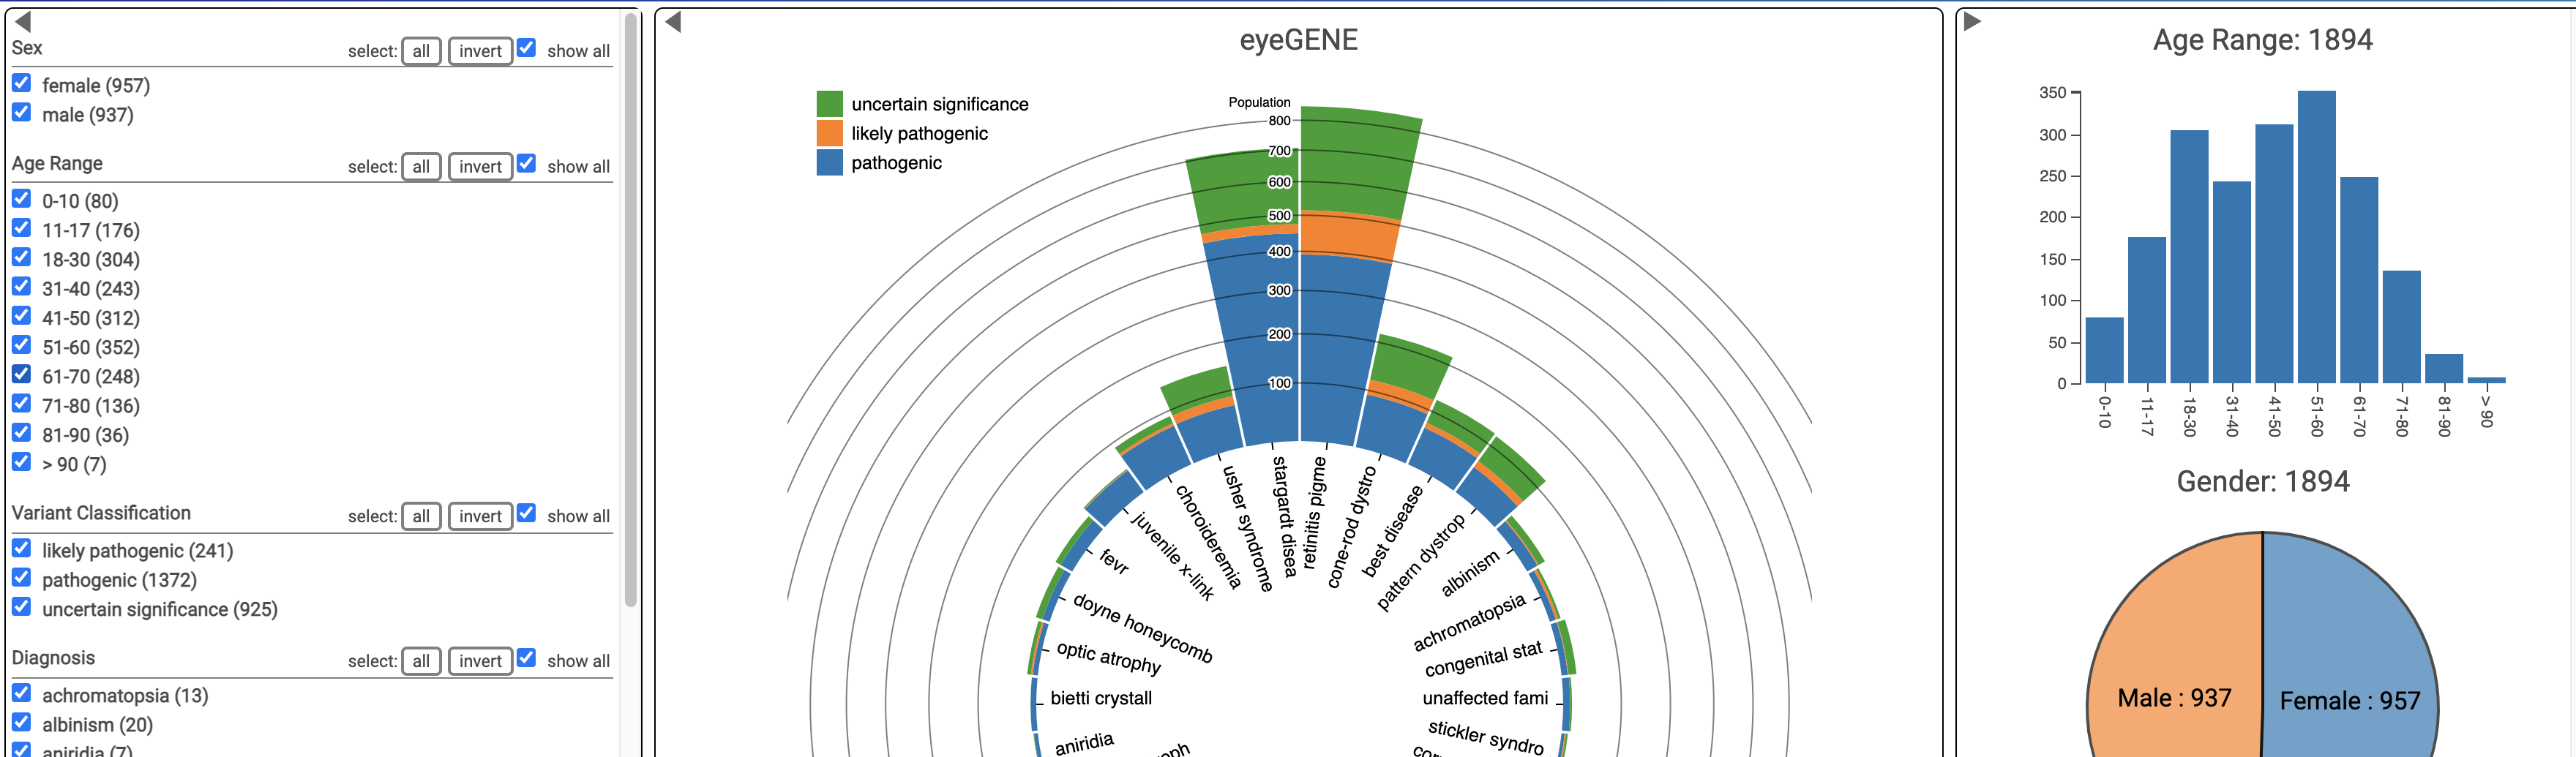 Eyegene Data Visualization